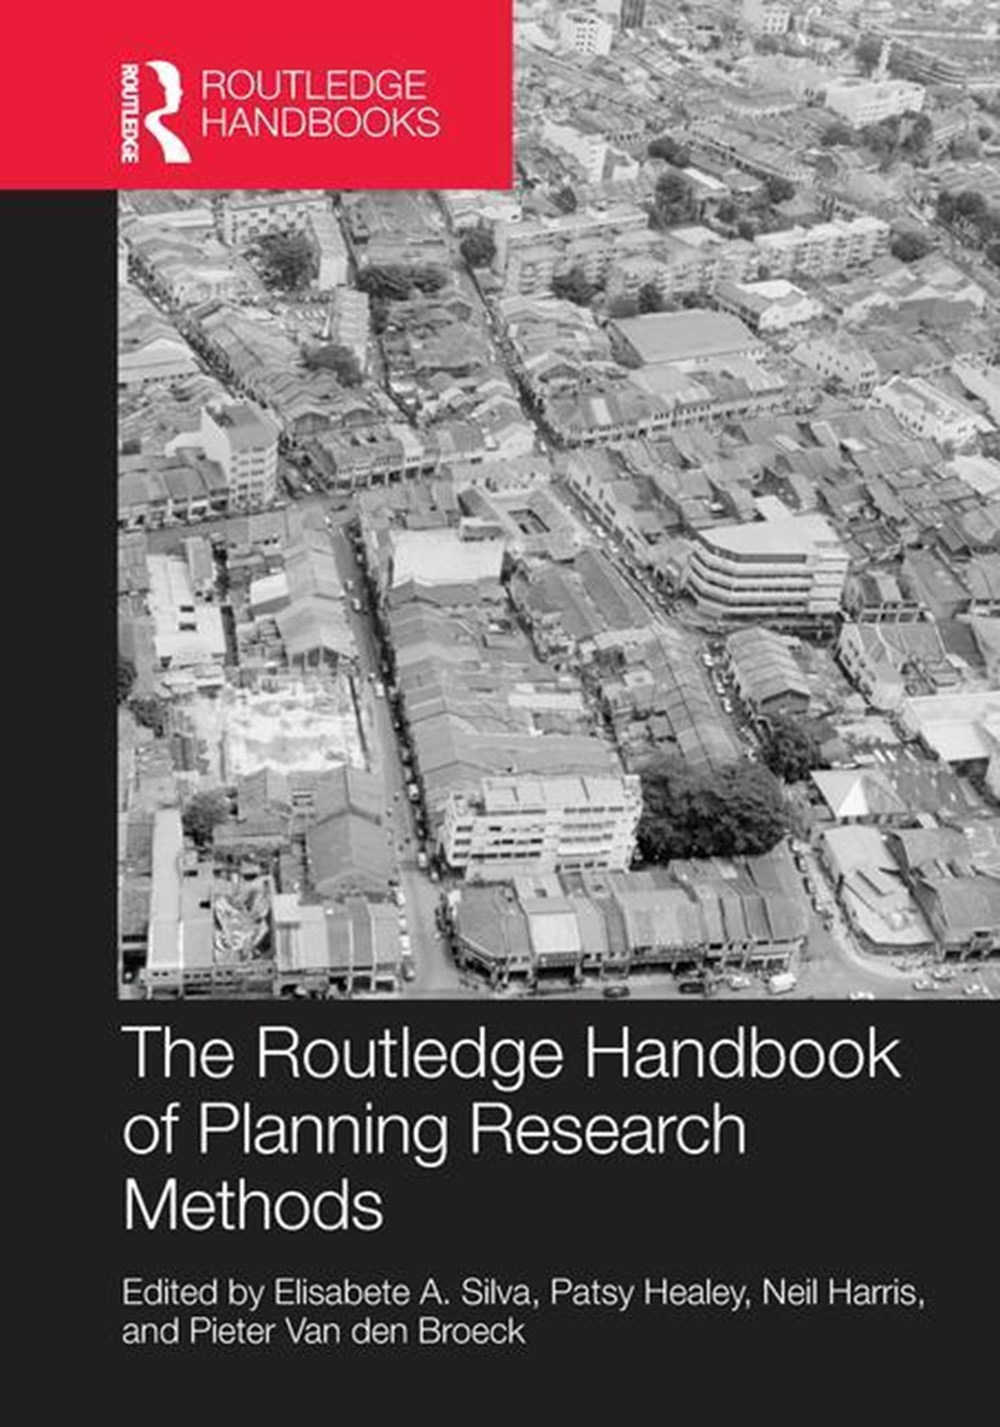 Routledge Handbook of Planning Research Methods